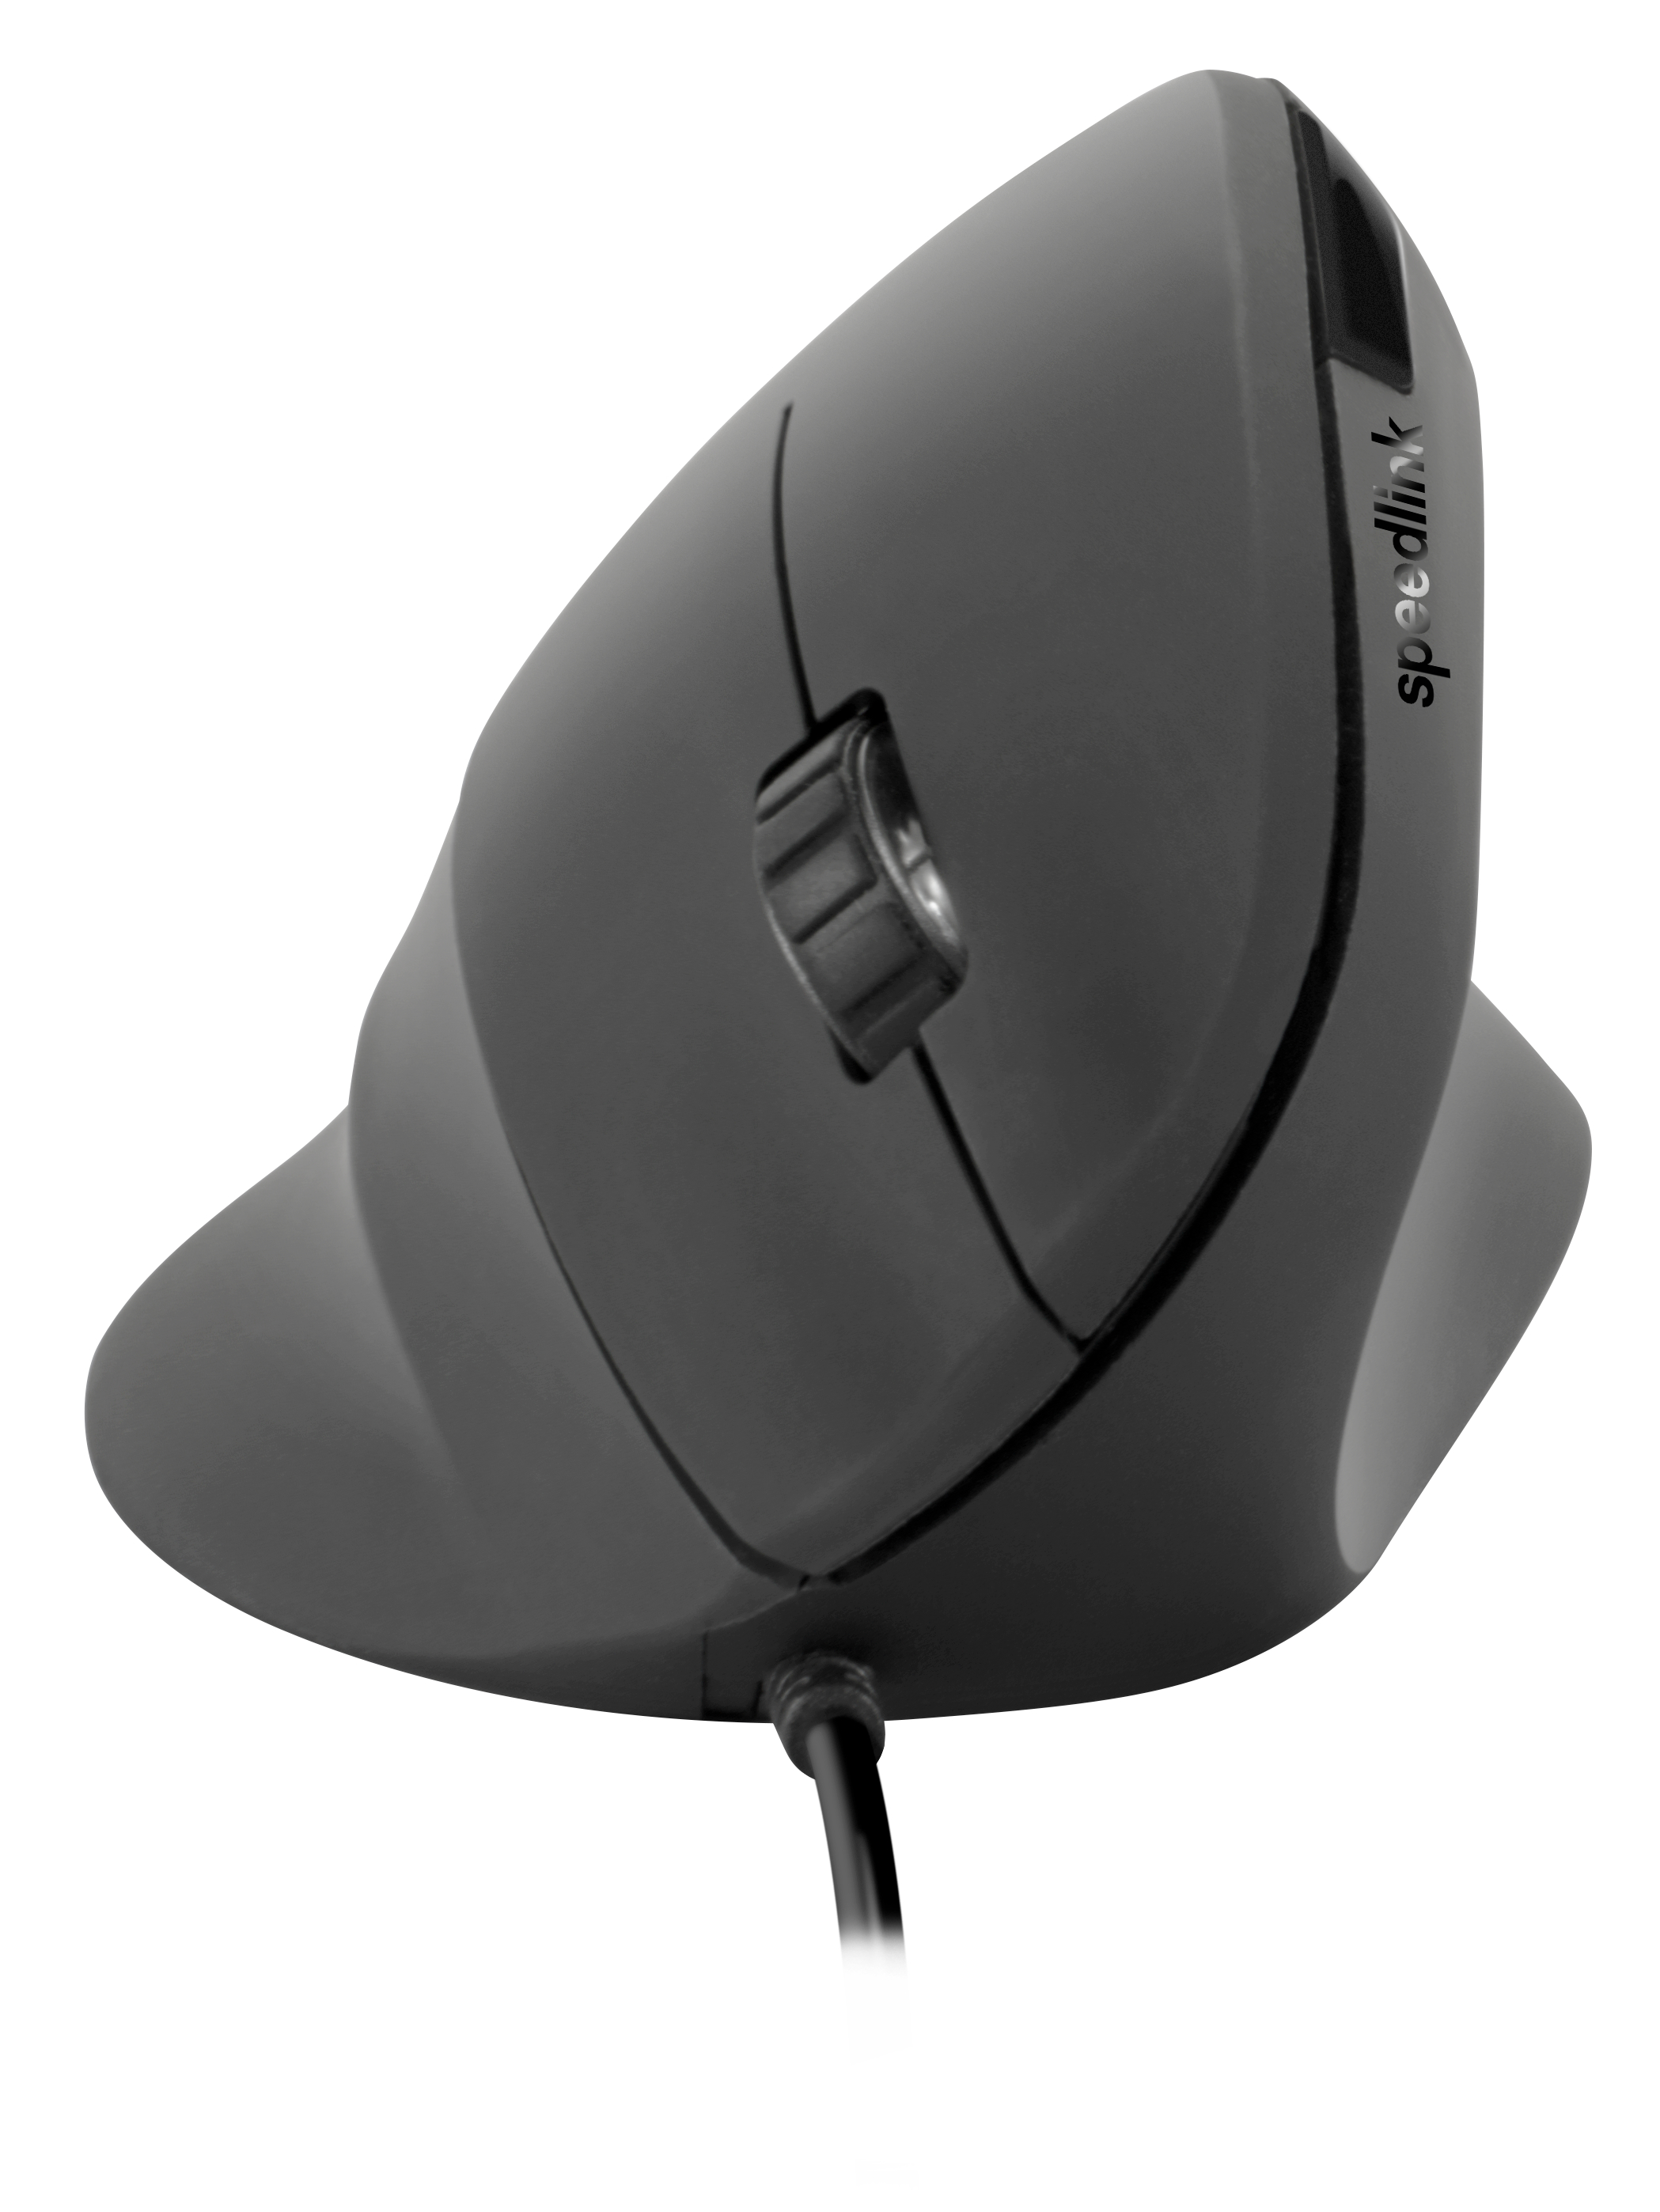 SPEEDLINK PIAVO Ergonomic Mouse USB SL-610019-RRBK vertical, rubber-black